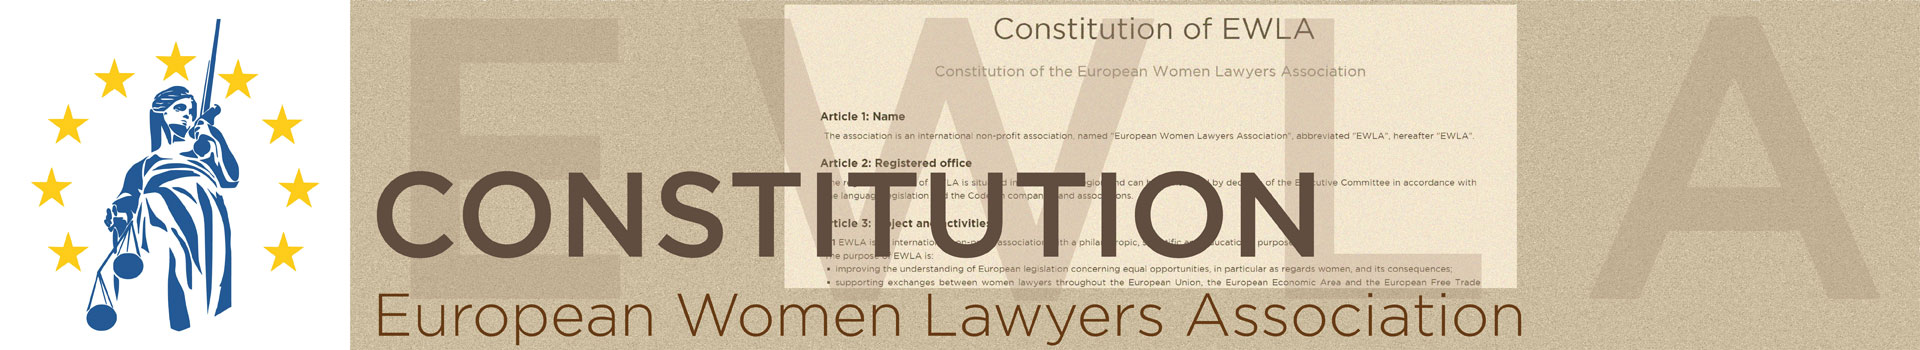 Constitution EWLA - European Women Lawyers Association